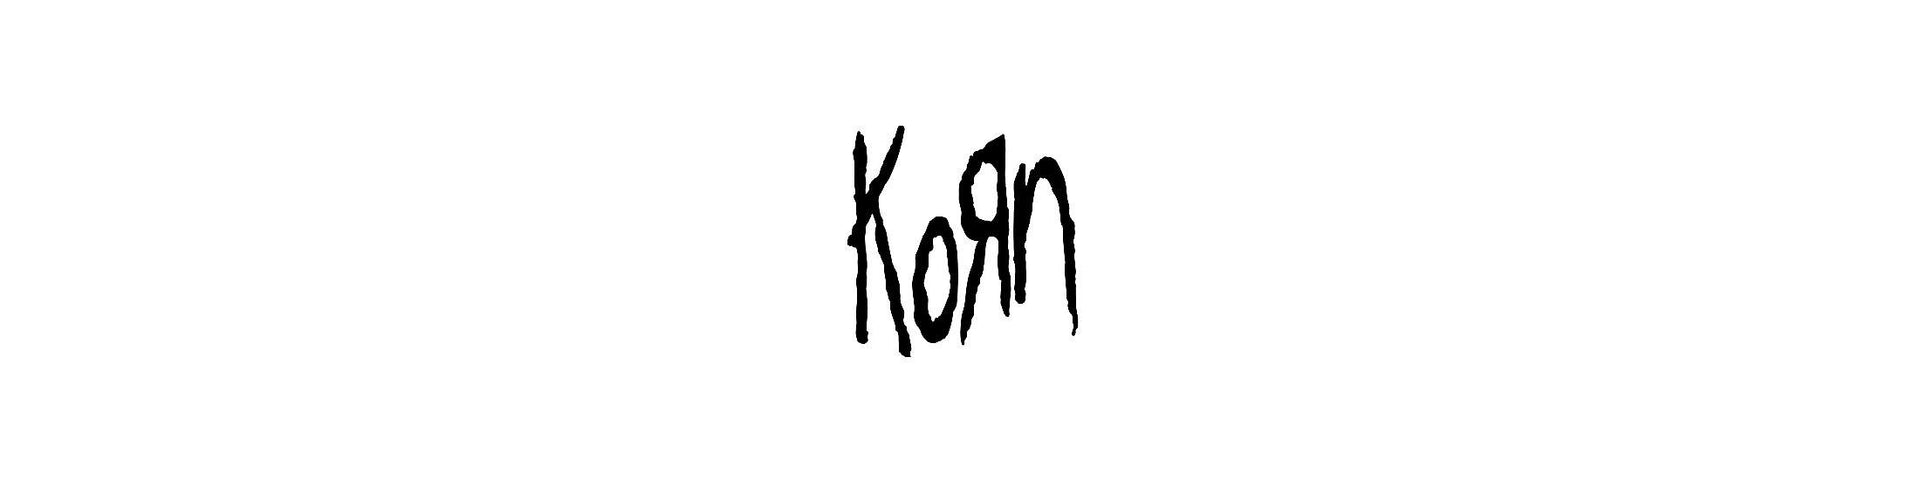 Shop – Korn – Band & Music Merch – Cold Cuts Merch